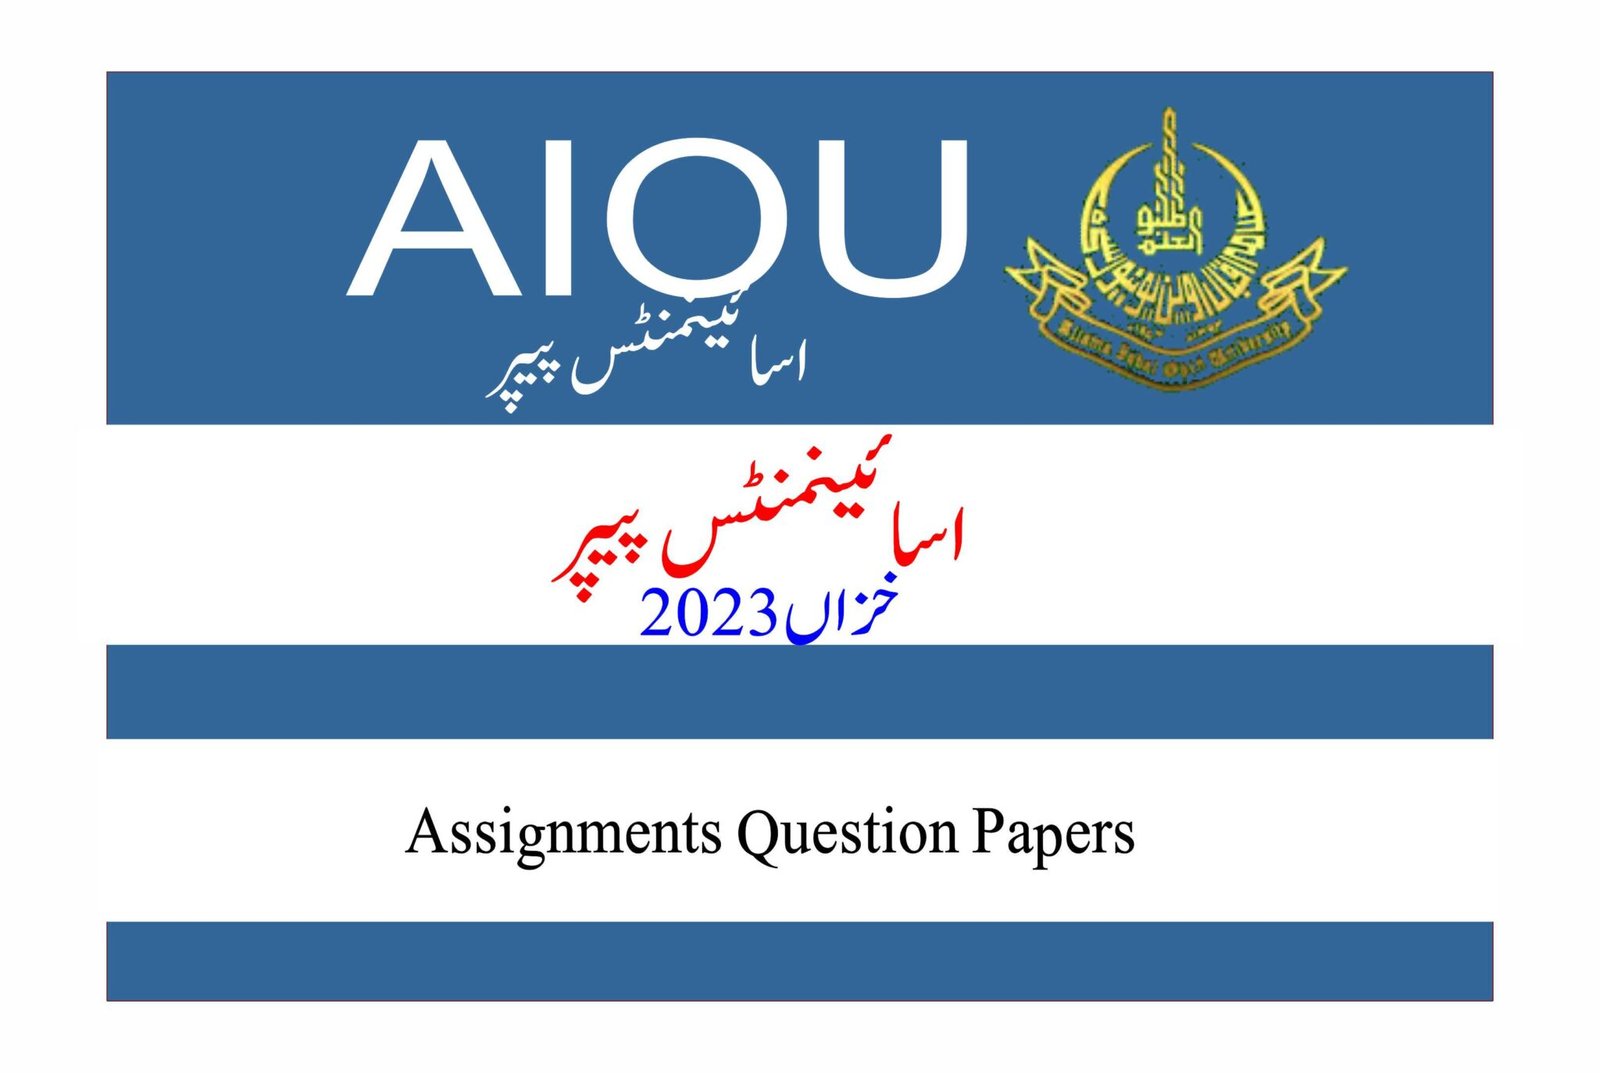 aiou assignment question paper 2023